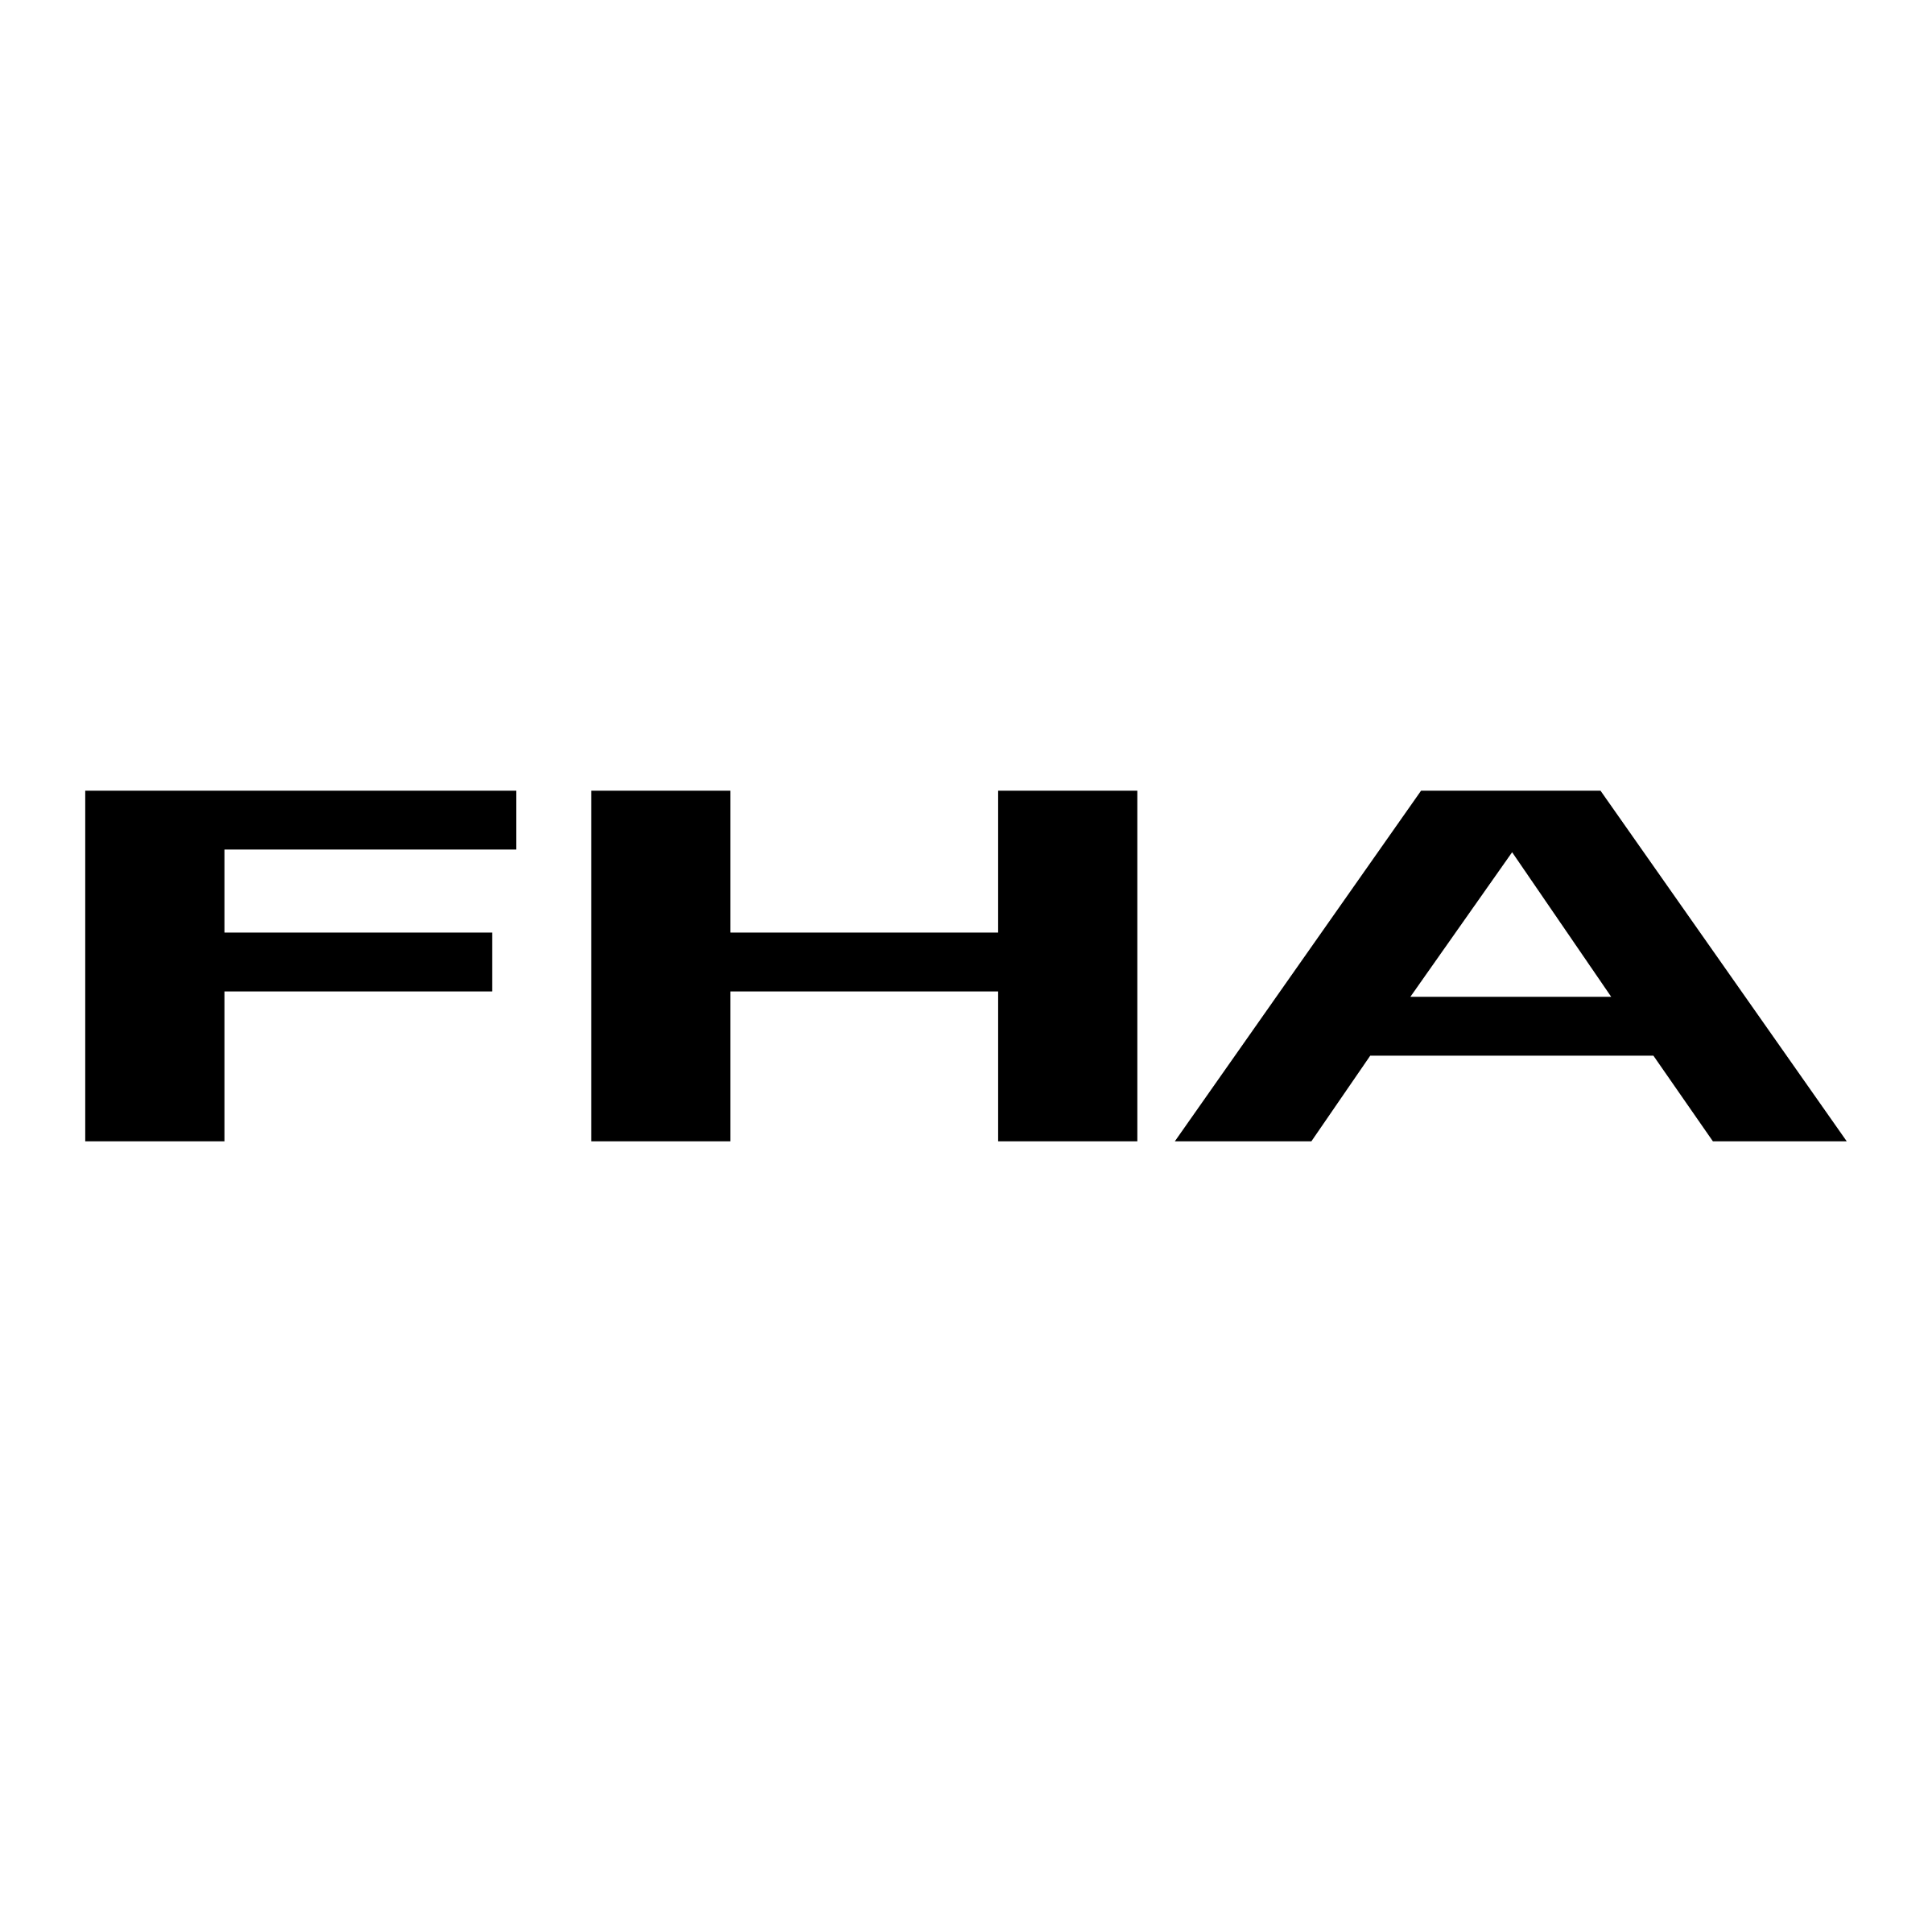 FHA Logo - FHA Logo PNG Transparent & SVG Vector - Freebie Supply